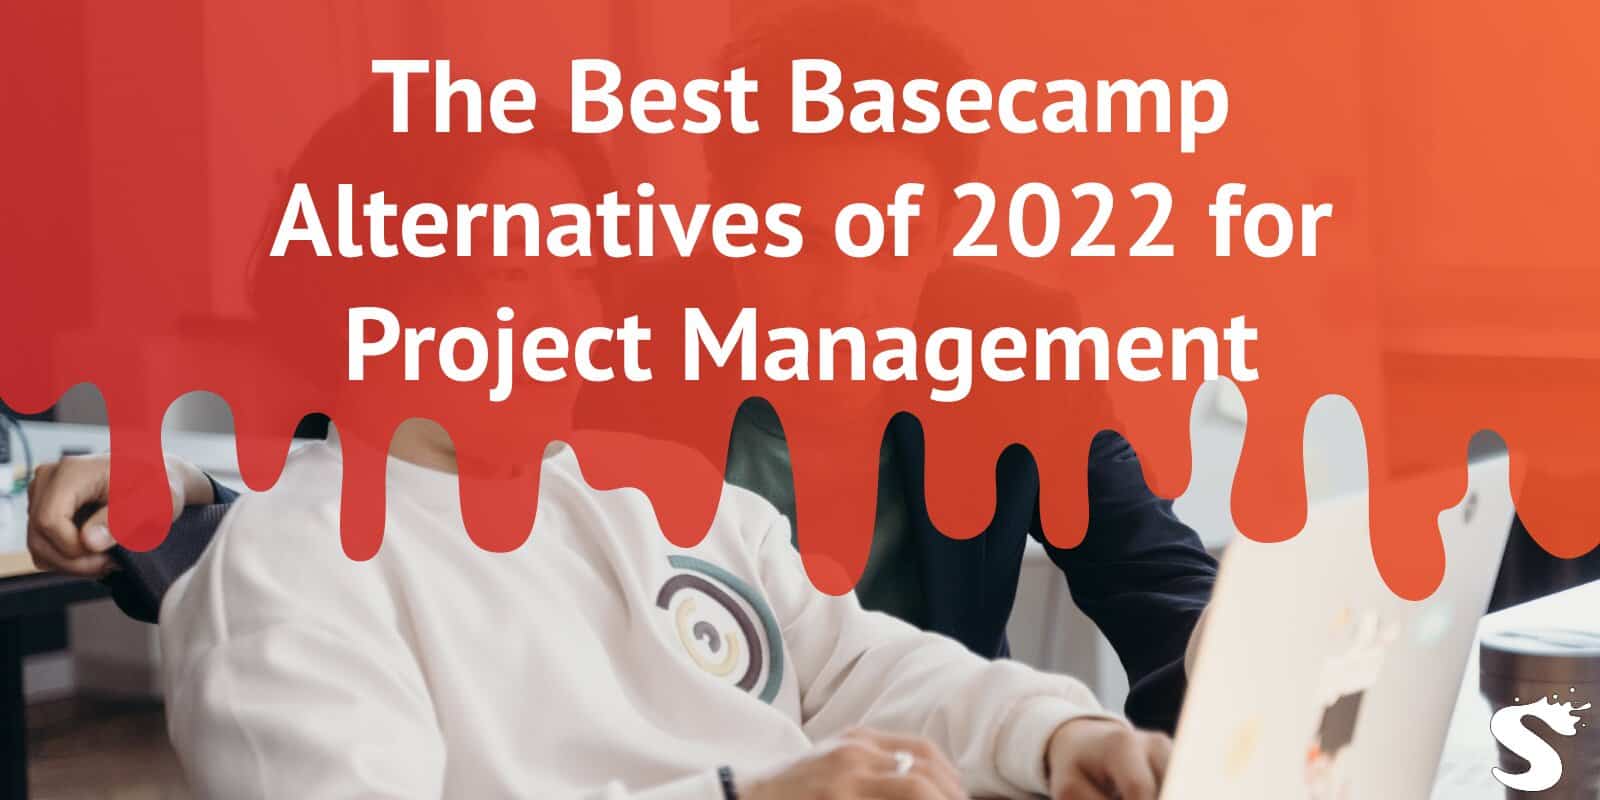 The Best Basecamp Alternatives of 2022 for Project Management